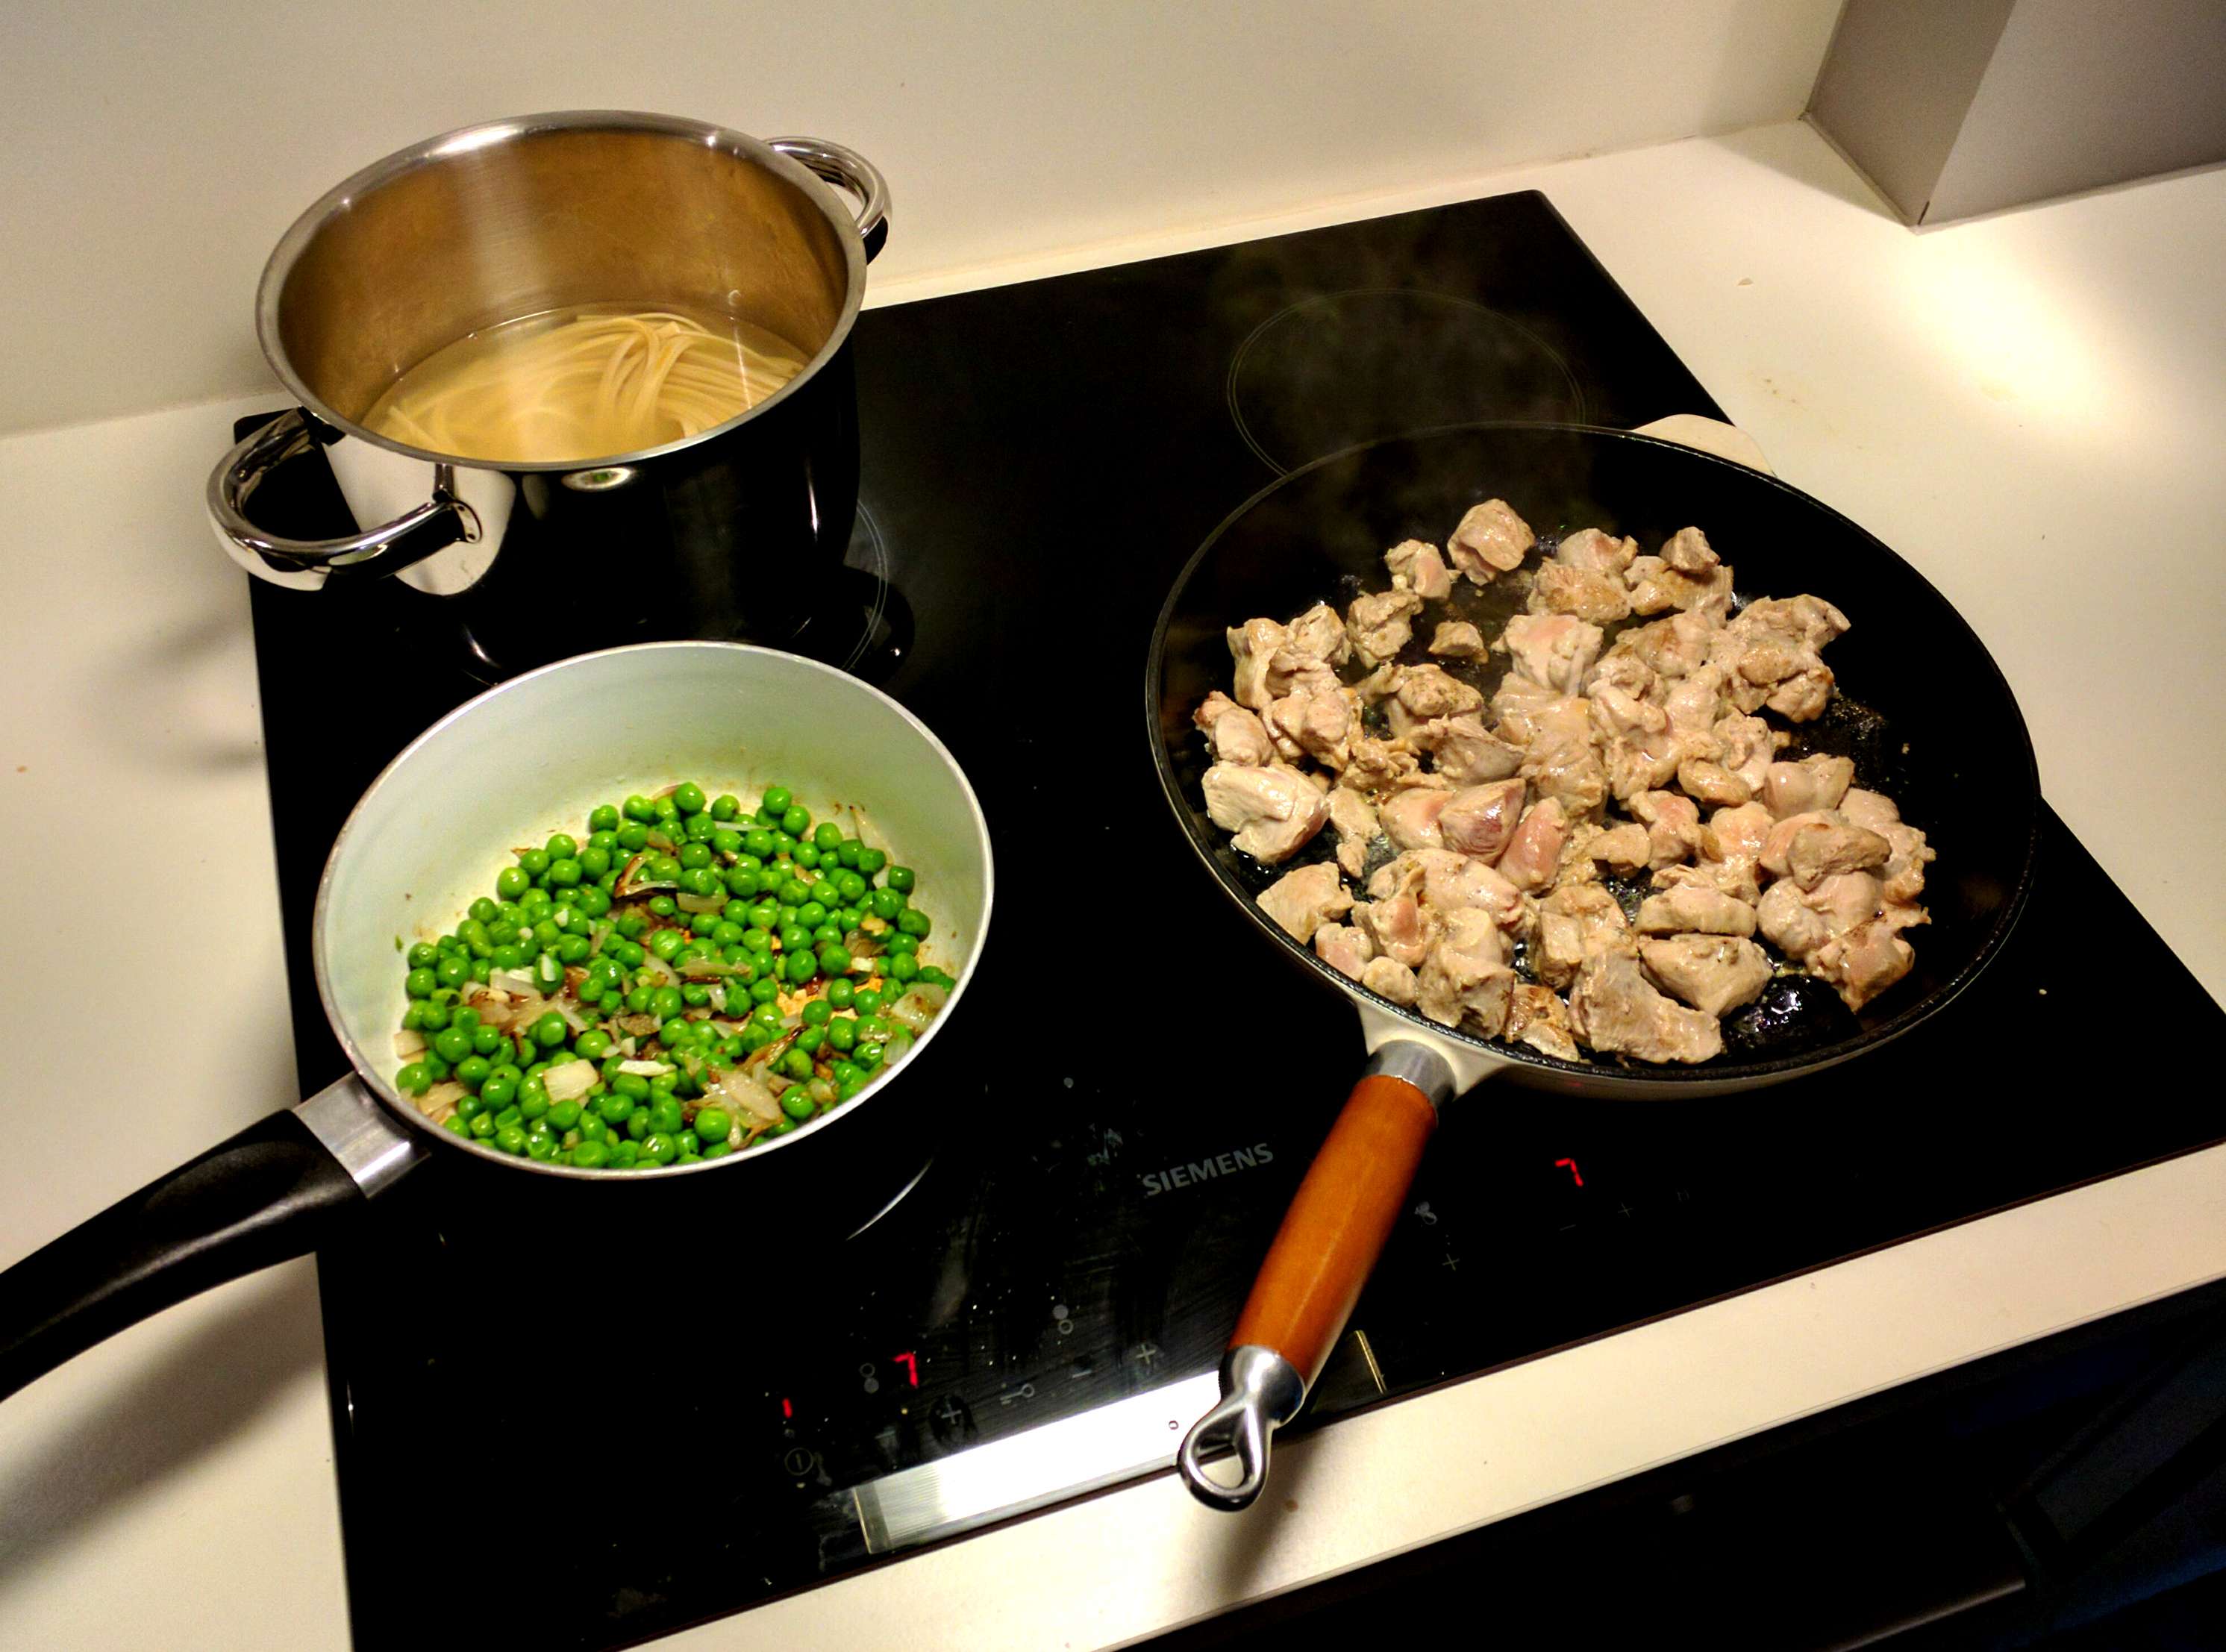 Preparing turkey linguine with green peas